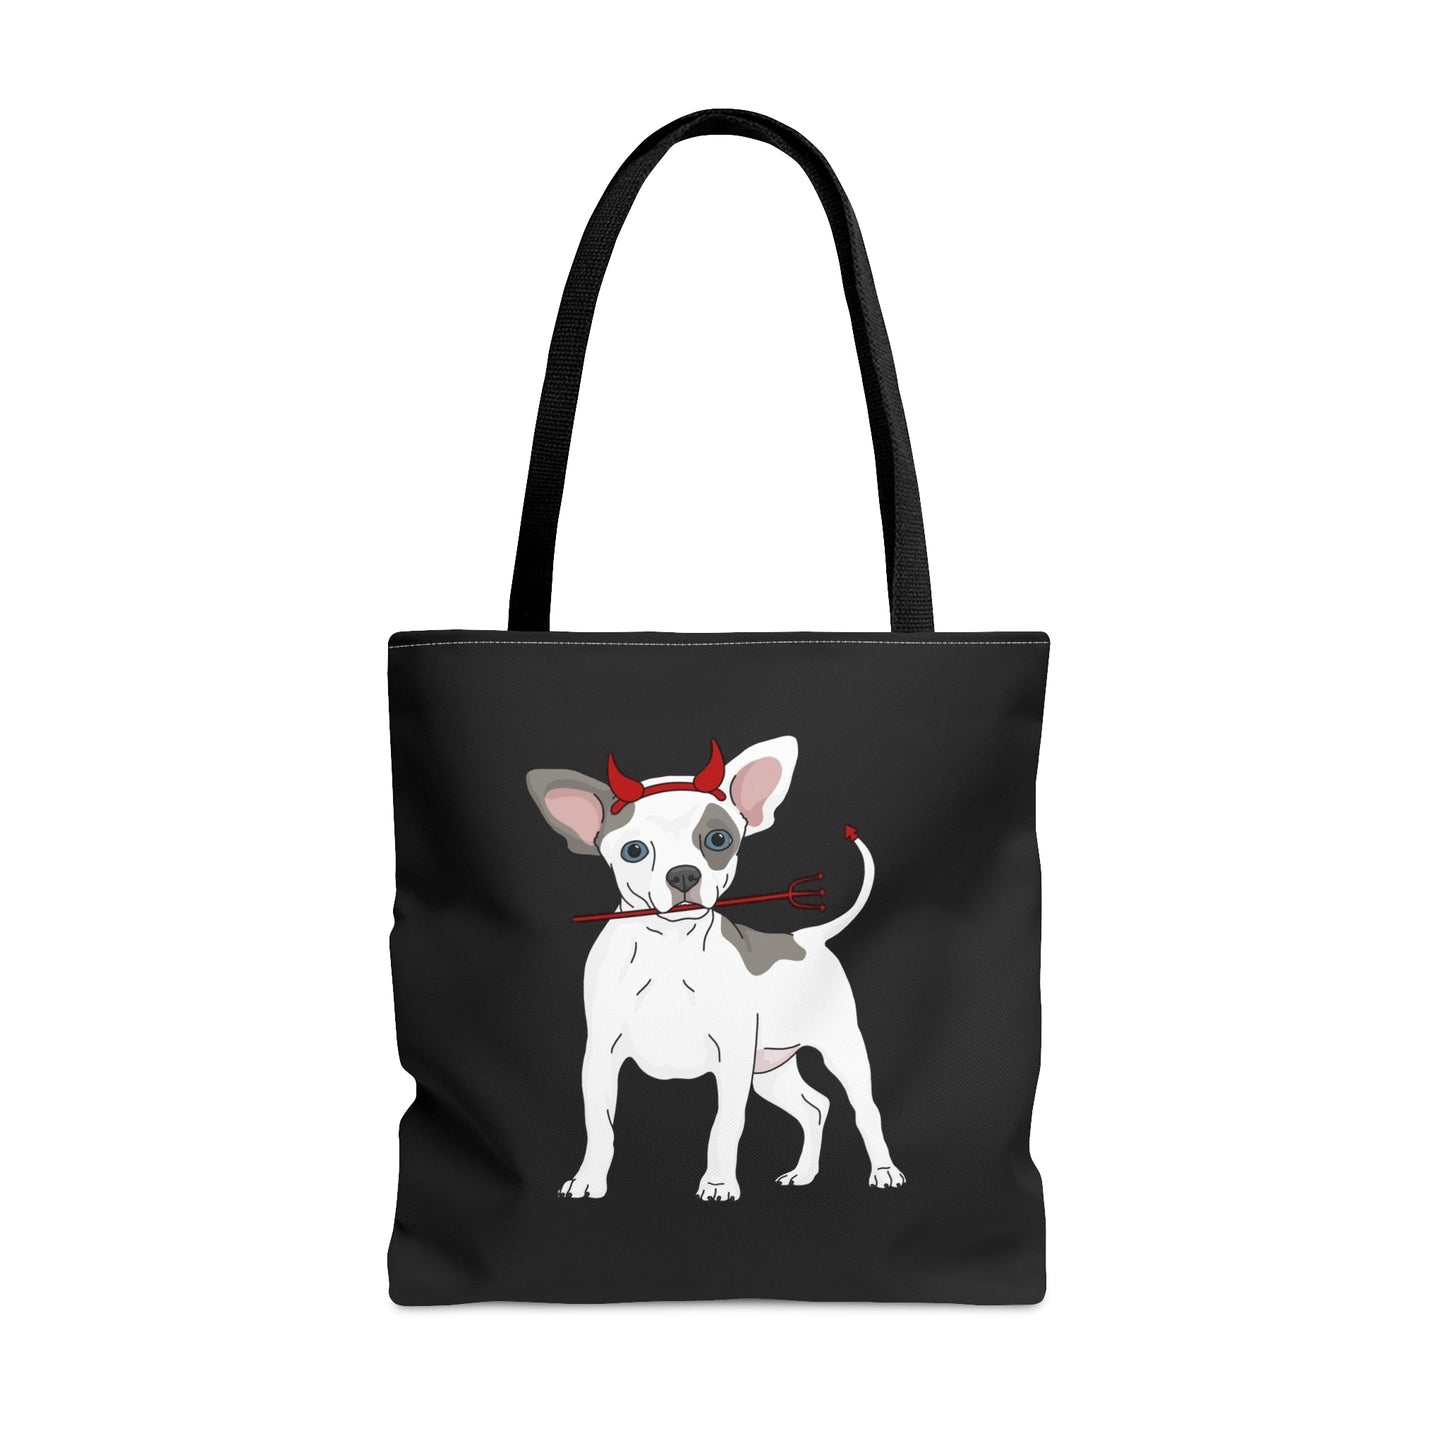 Devil Puppy | Tote Bag - Detezi Designs-13473575208565177181